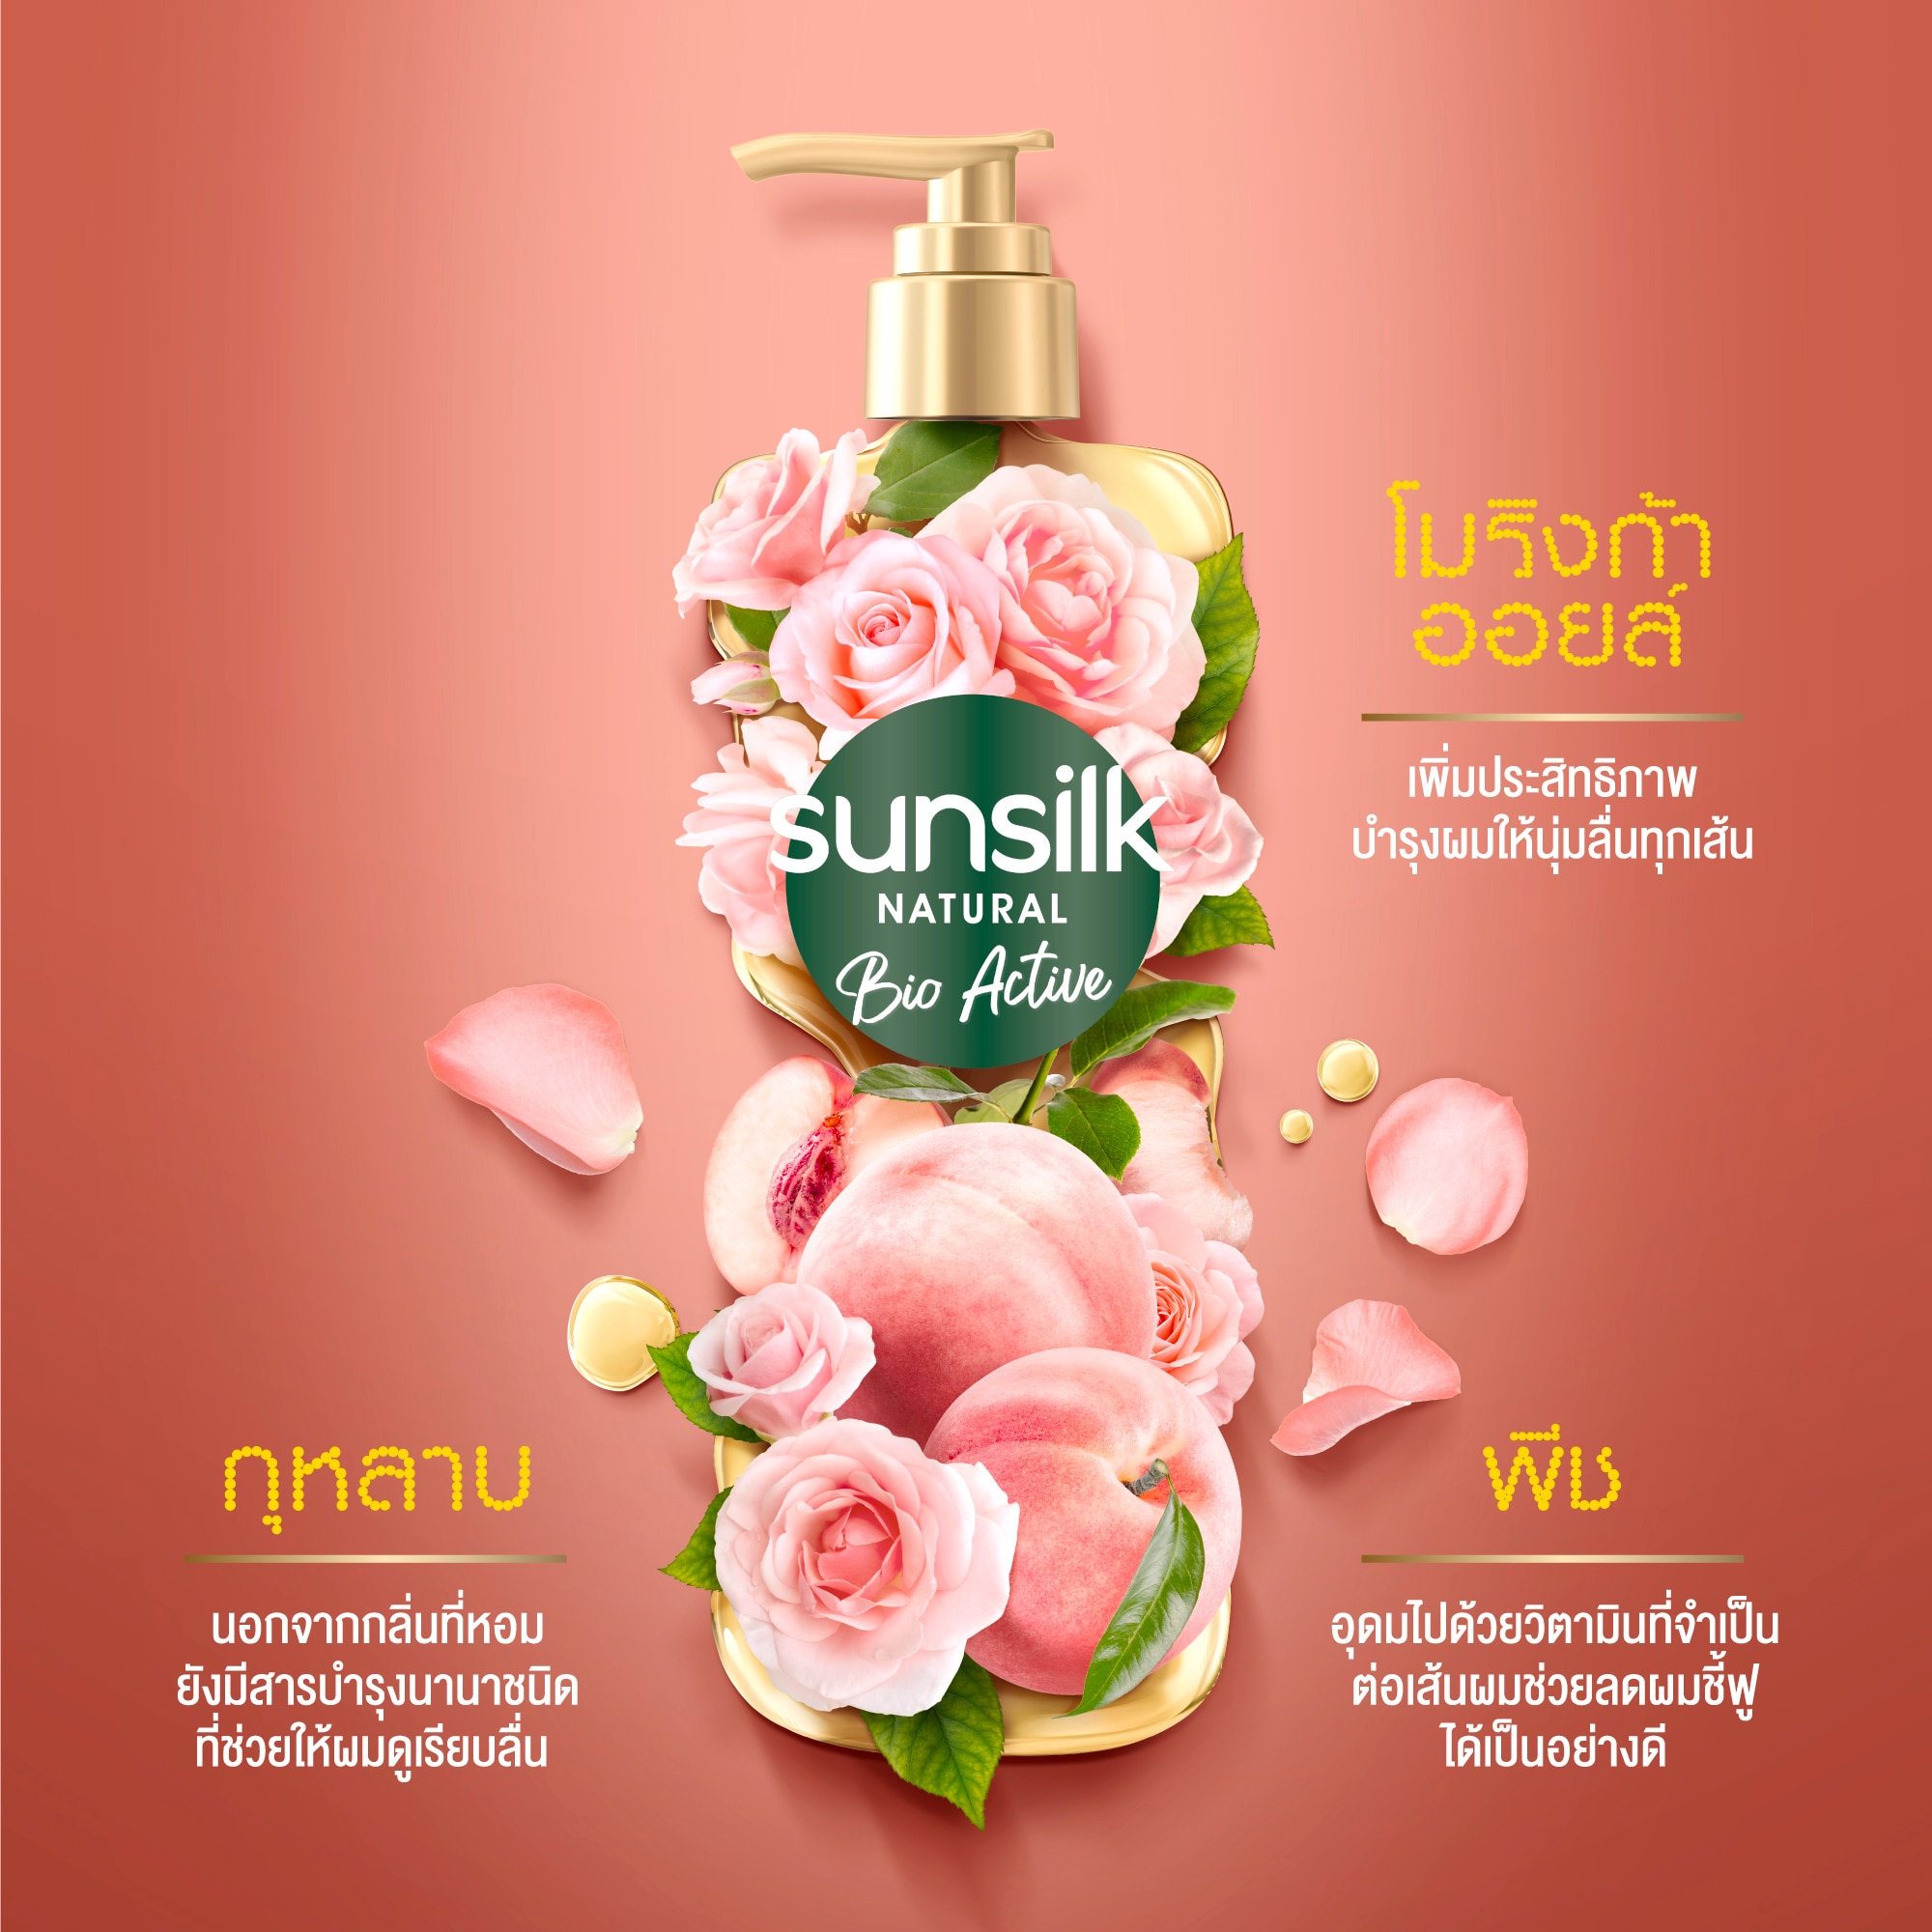 sunsilk-natural-bio-active-smooth-shine